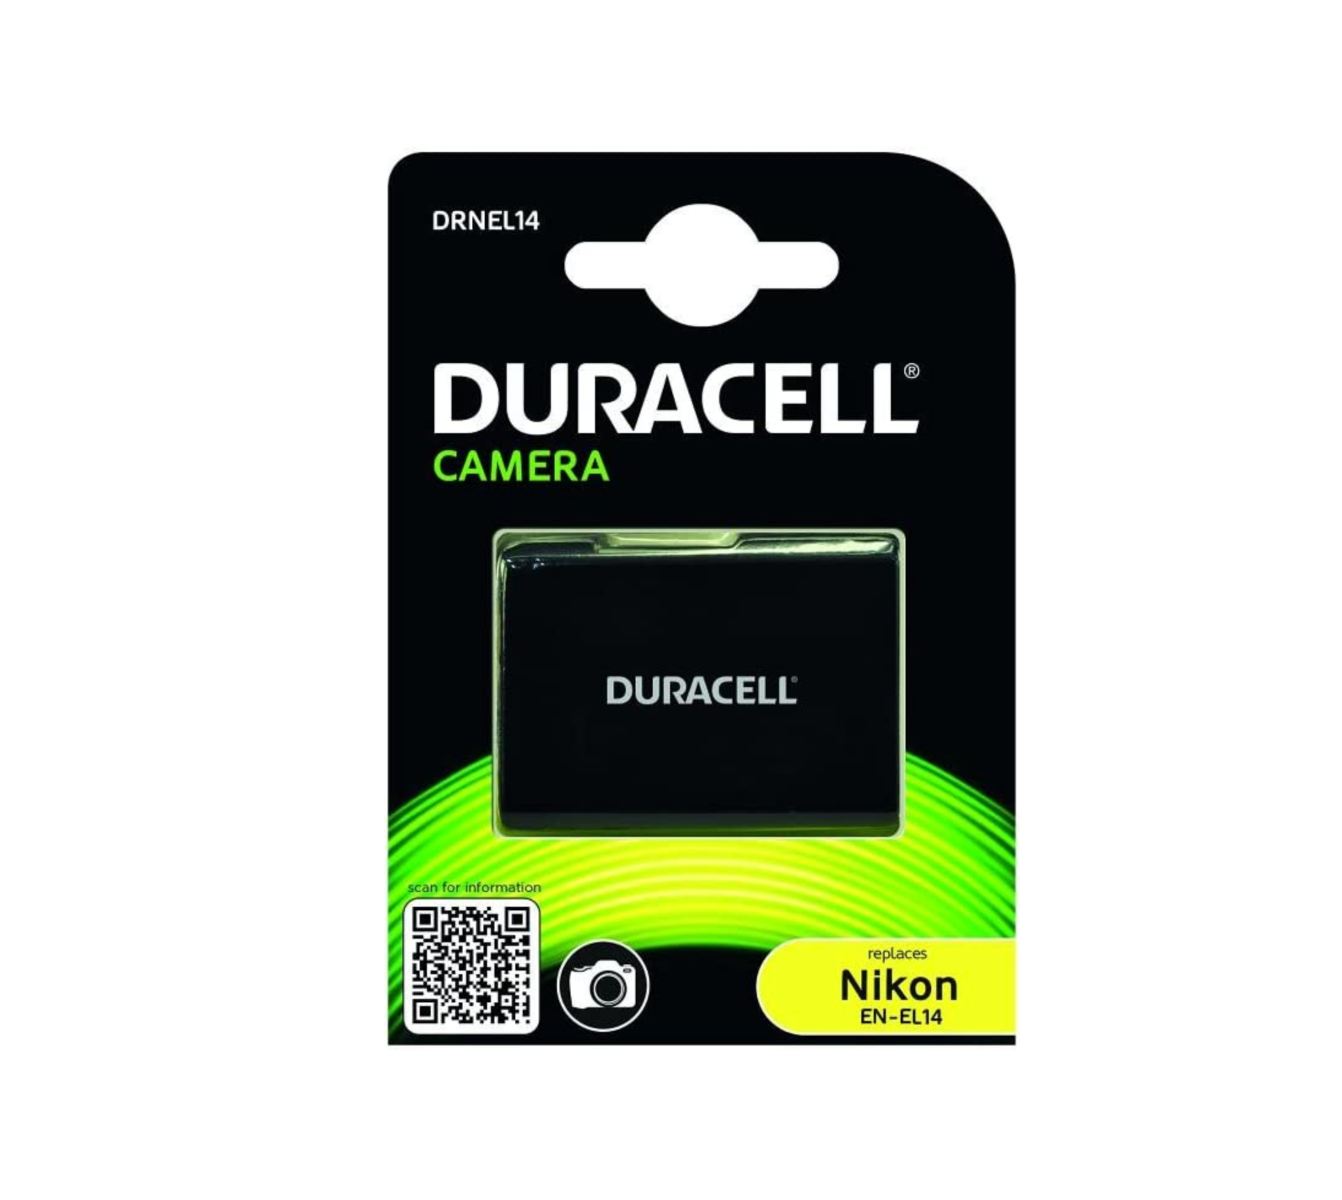 Product Image of Duracell Premium Analogue Nikon EN-EL14 Battery - DRNEL14